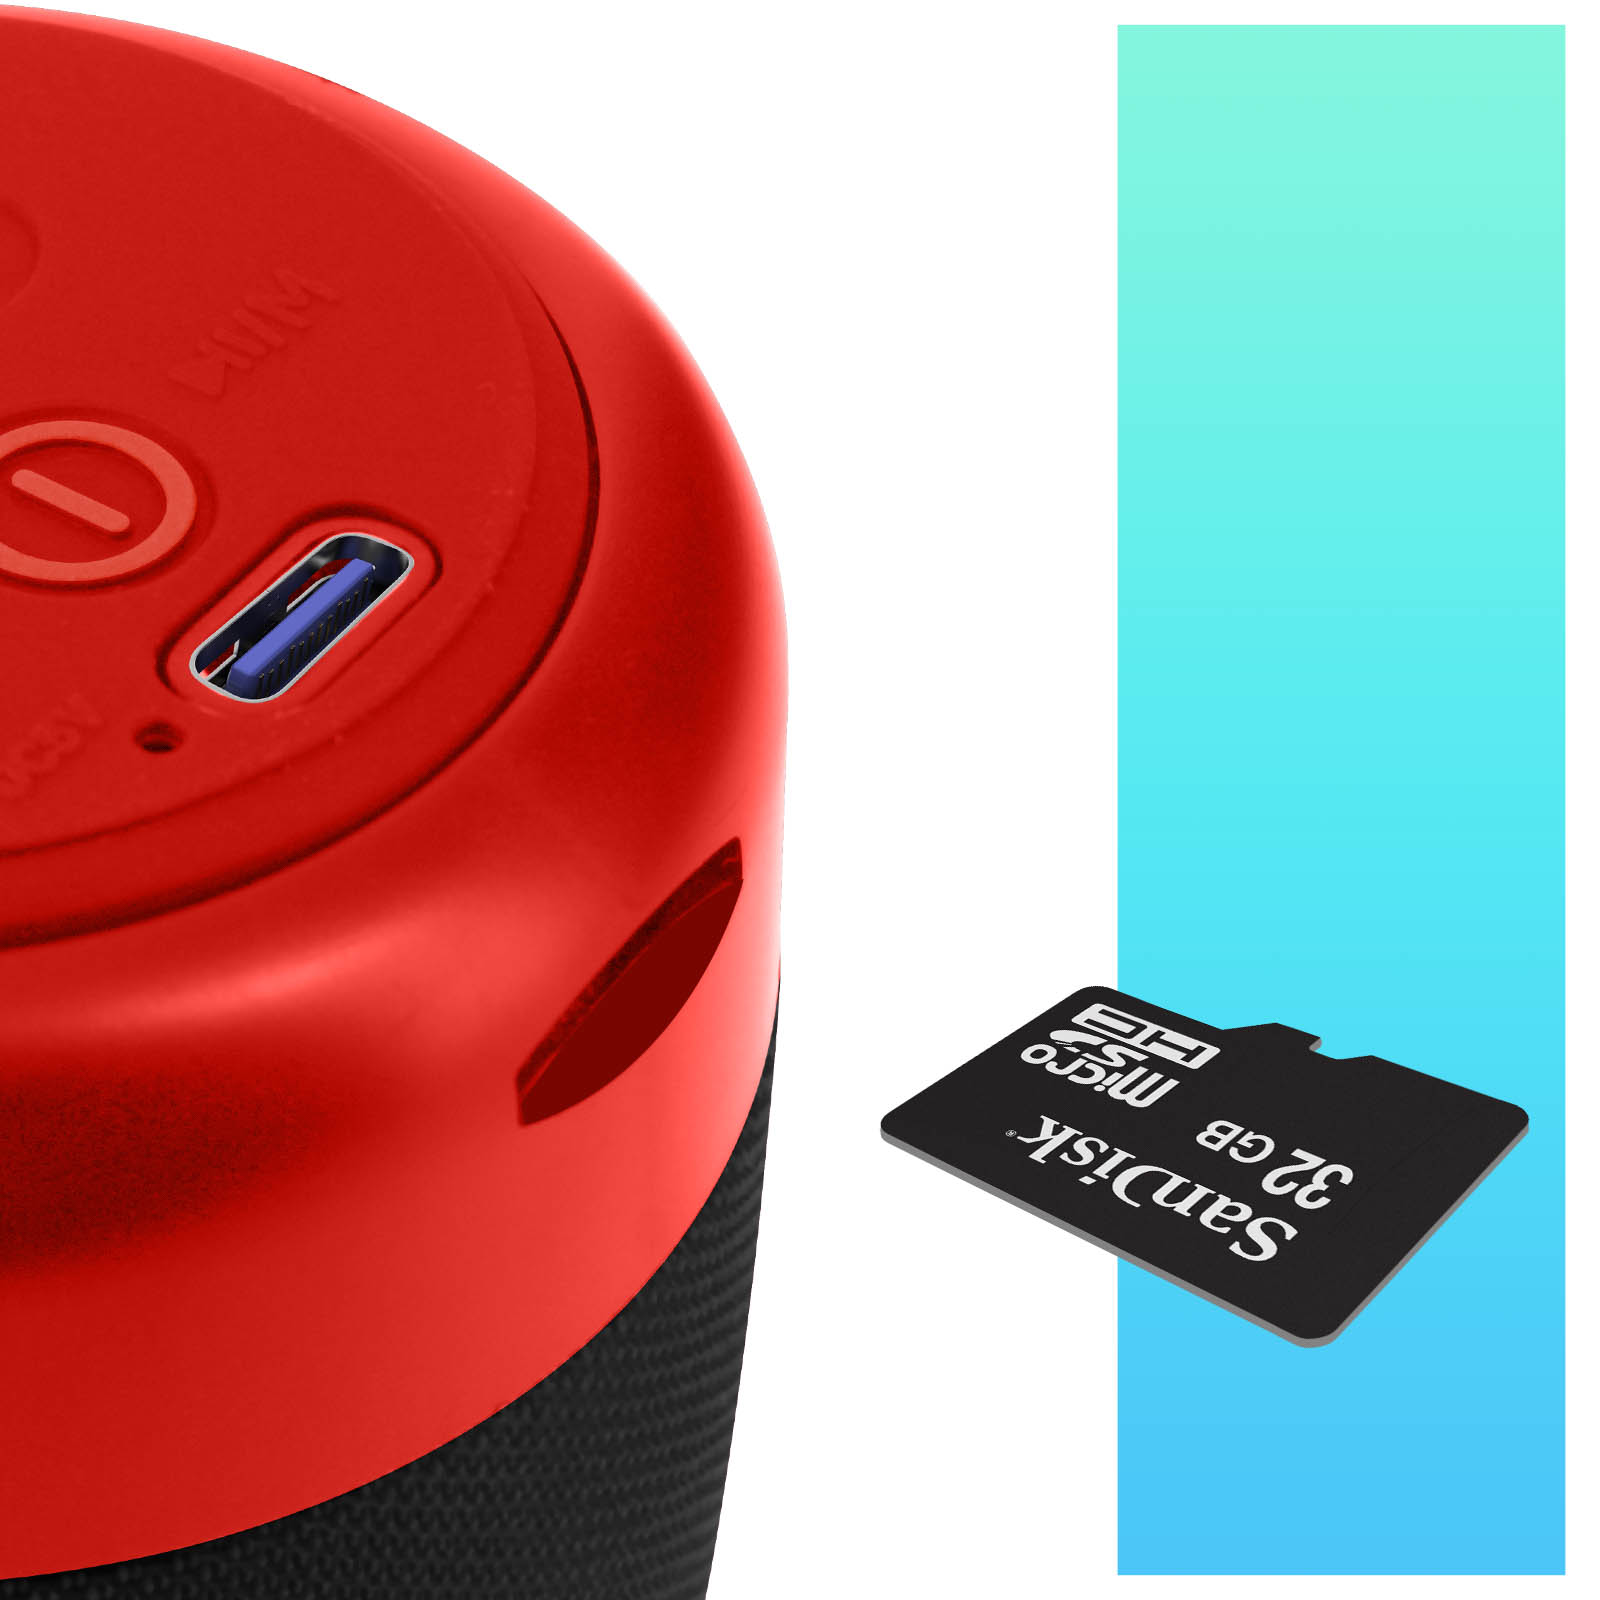 Mini Enceinte Bluetooth 5.0, Radio FM et Micro avec Dragonne